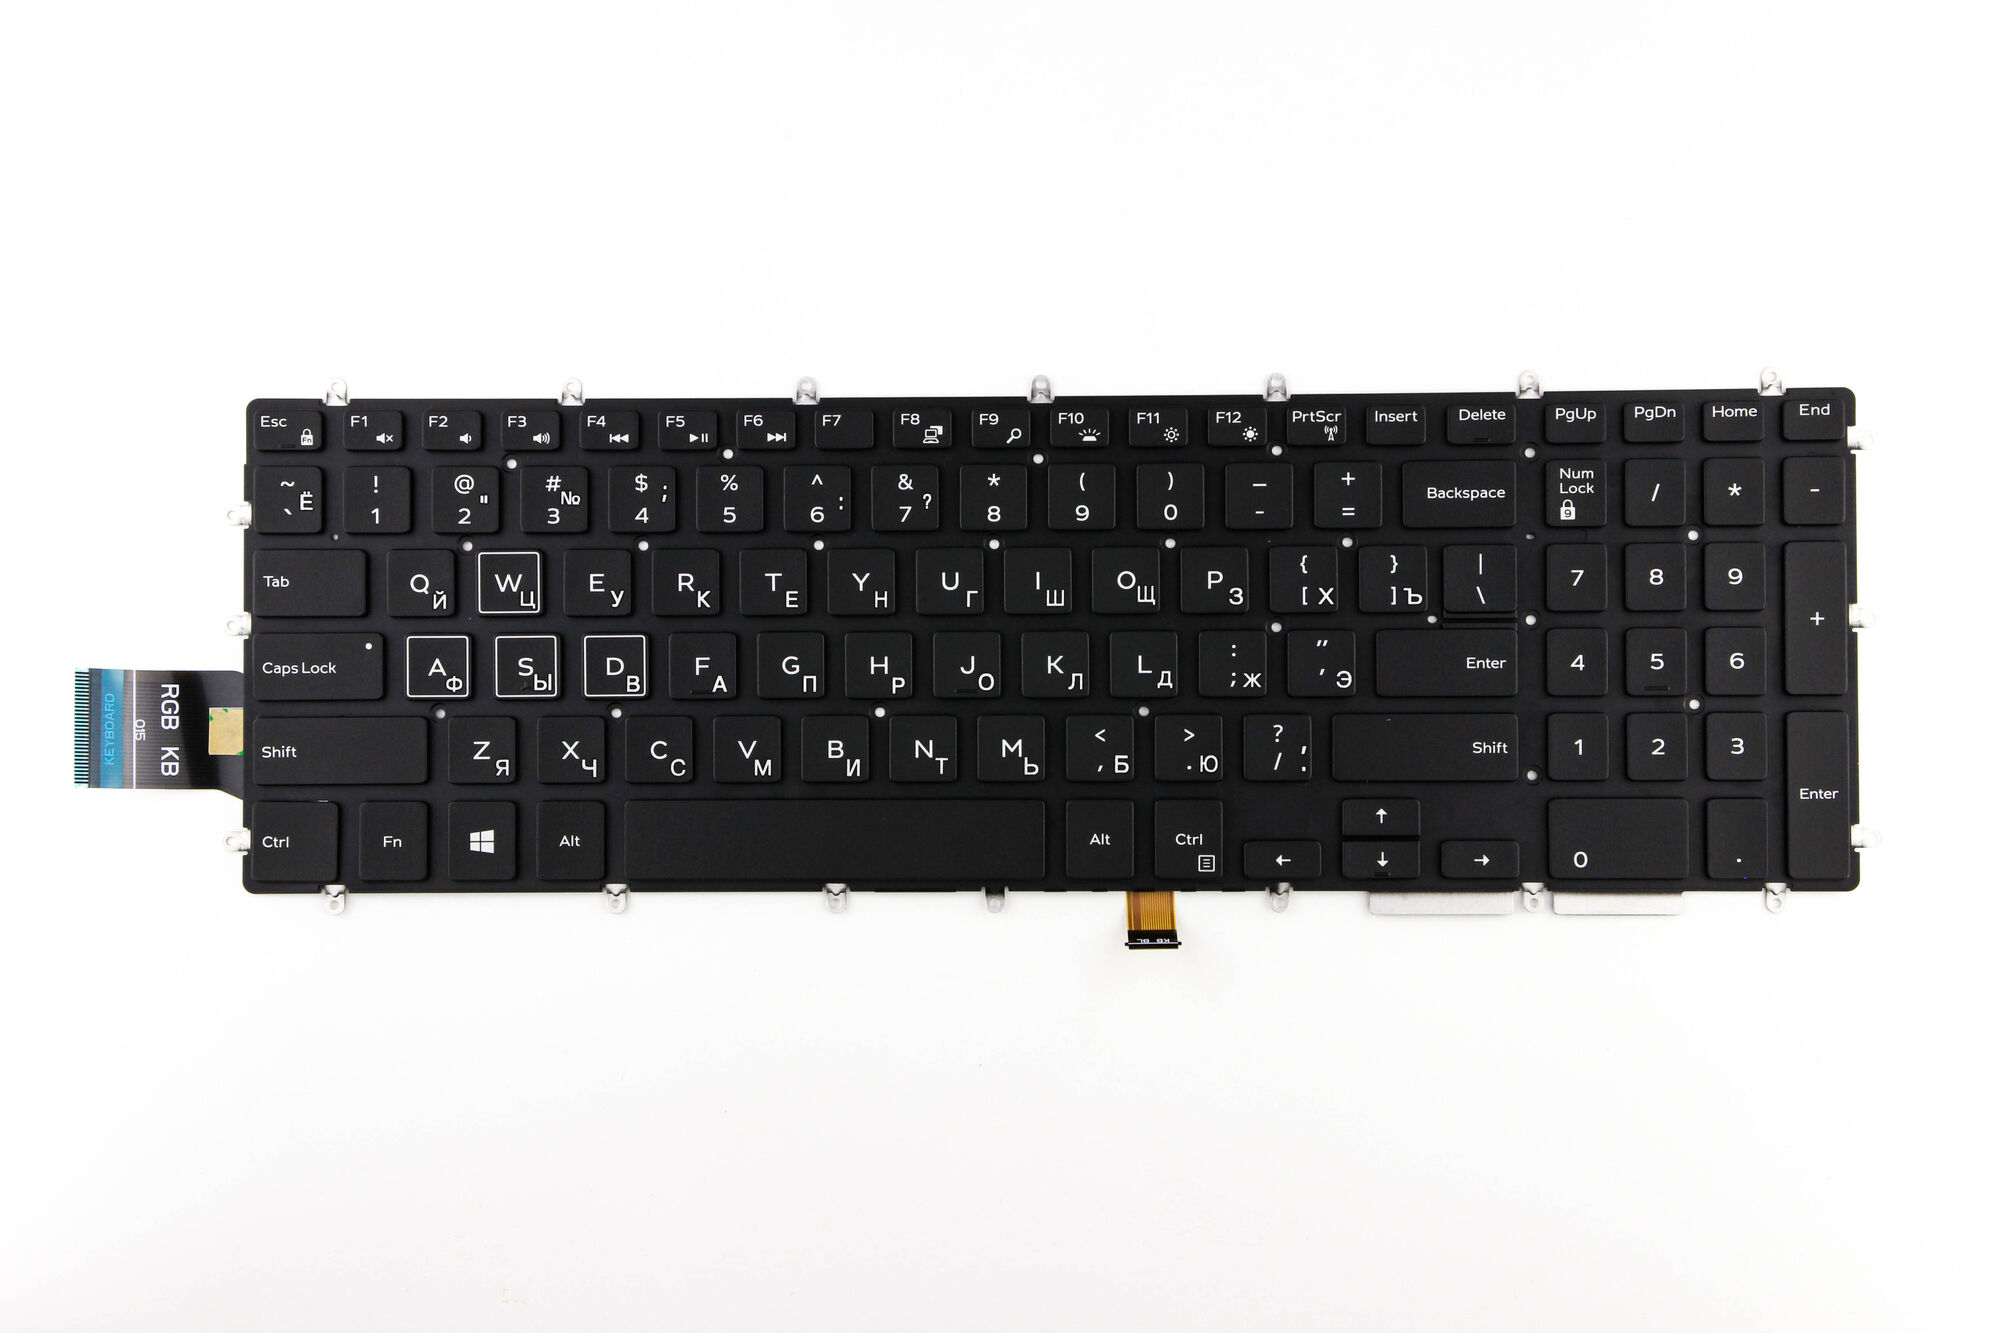 Клавиатура для ноутбука Dell Alienware M15 R1 M17 R1 RGB p/n: 0JRN29 0KN4-0H1US13